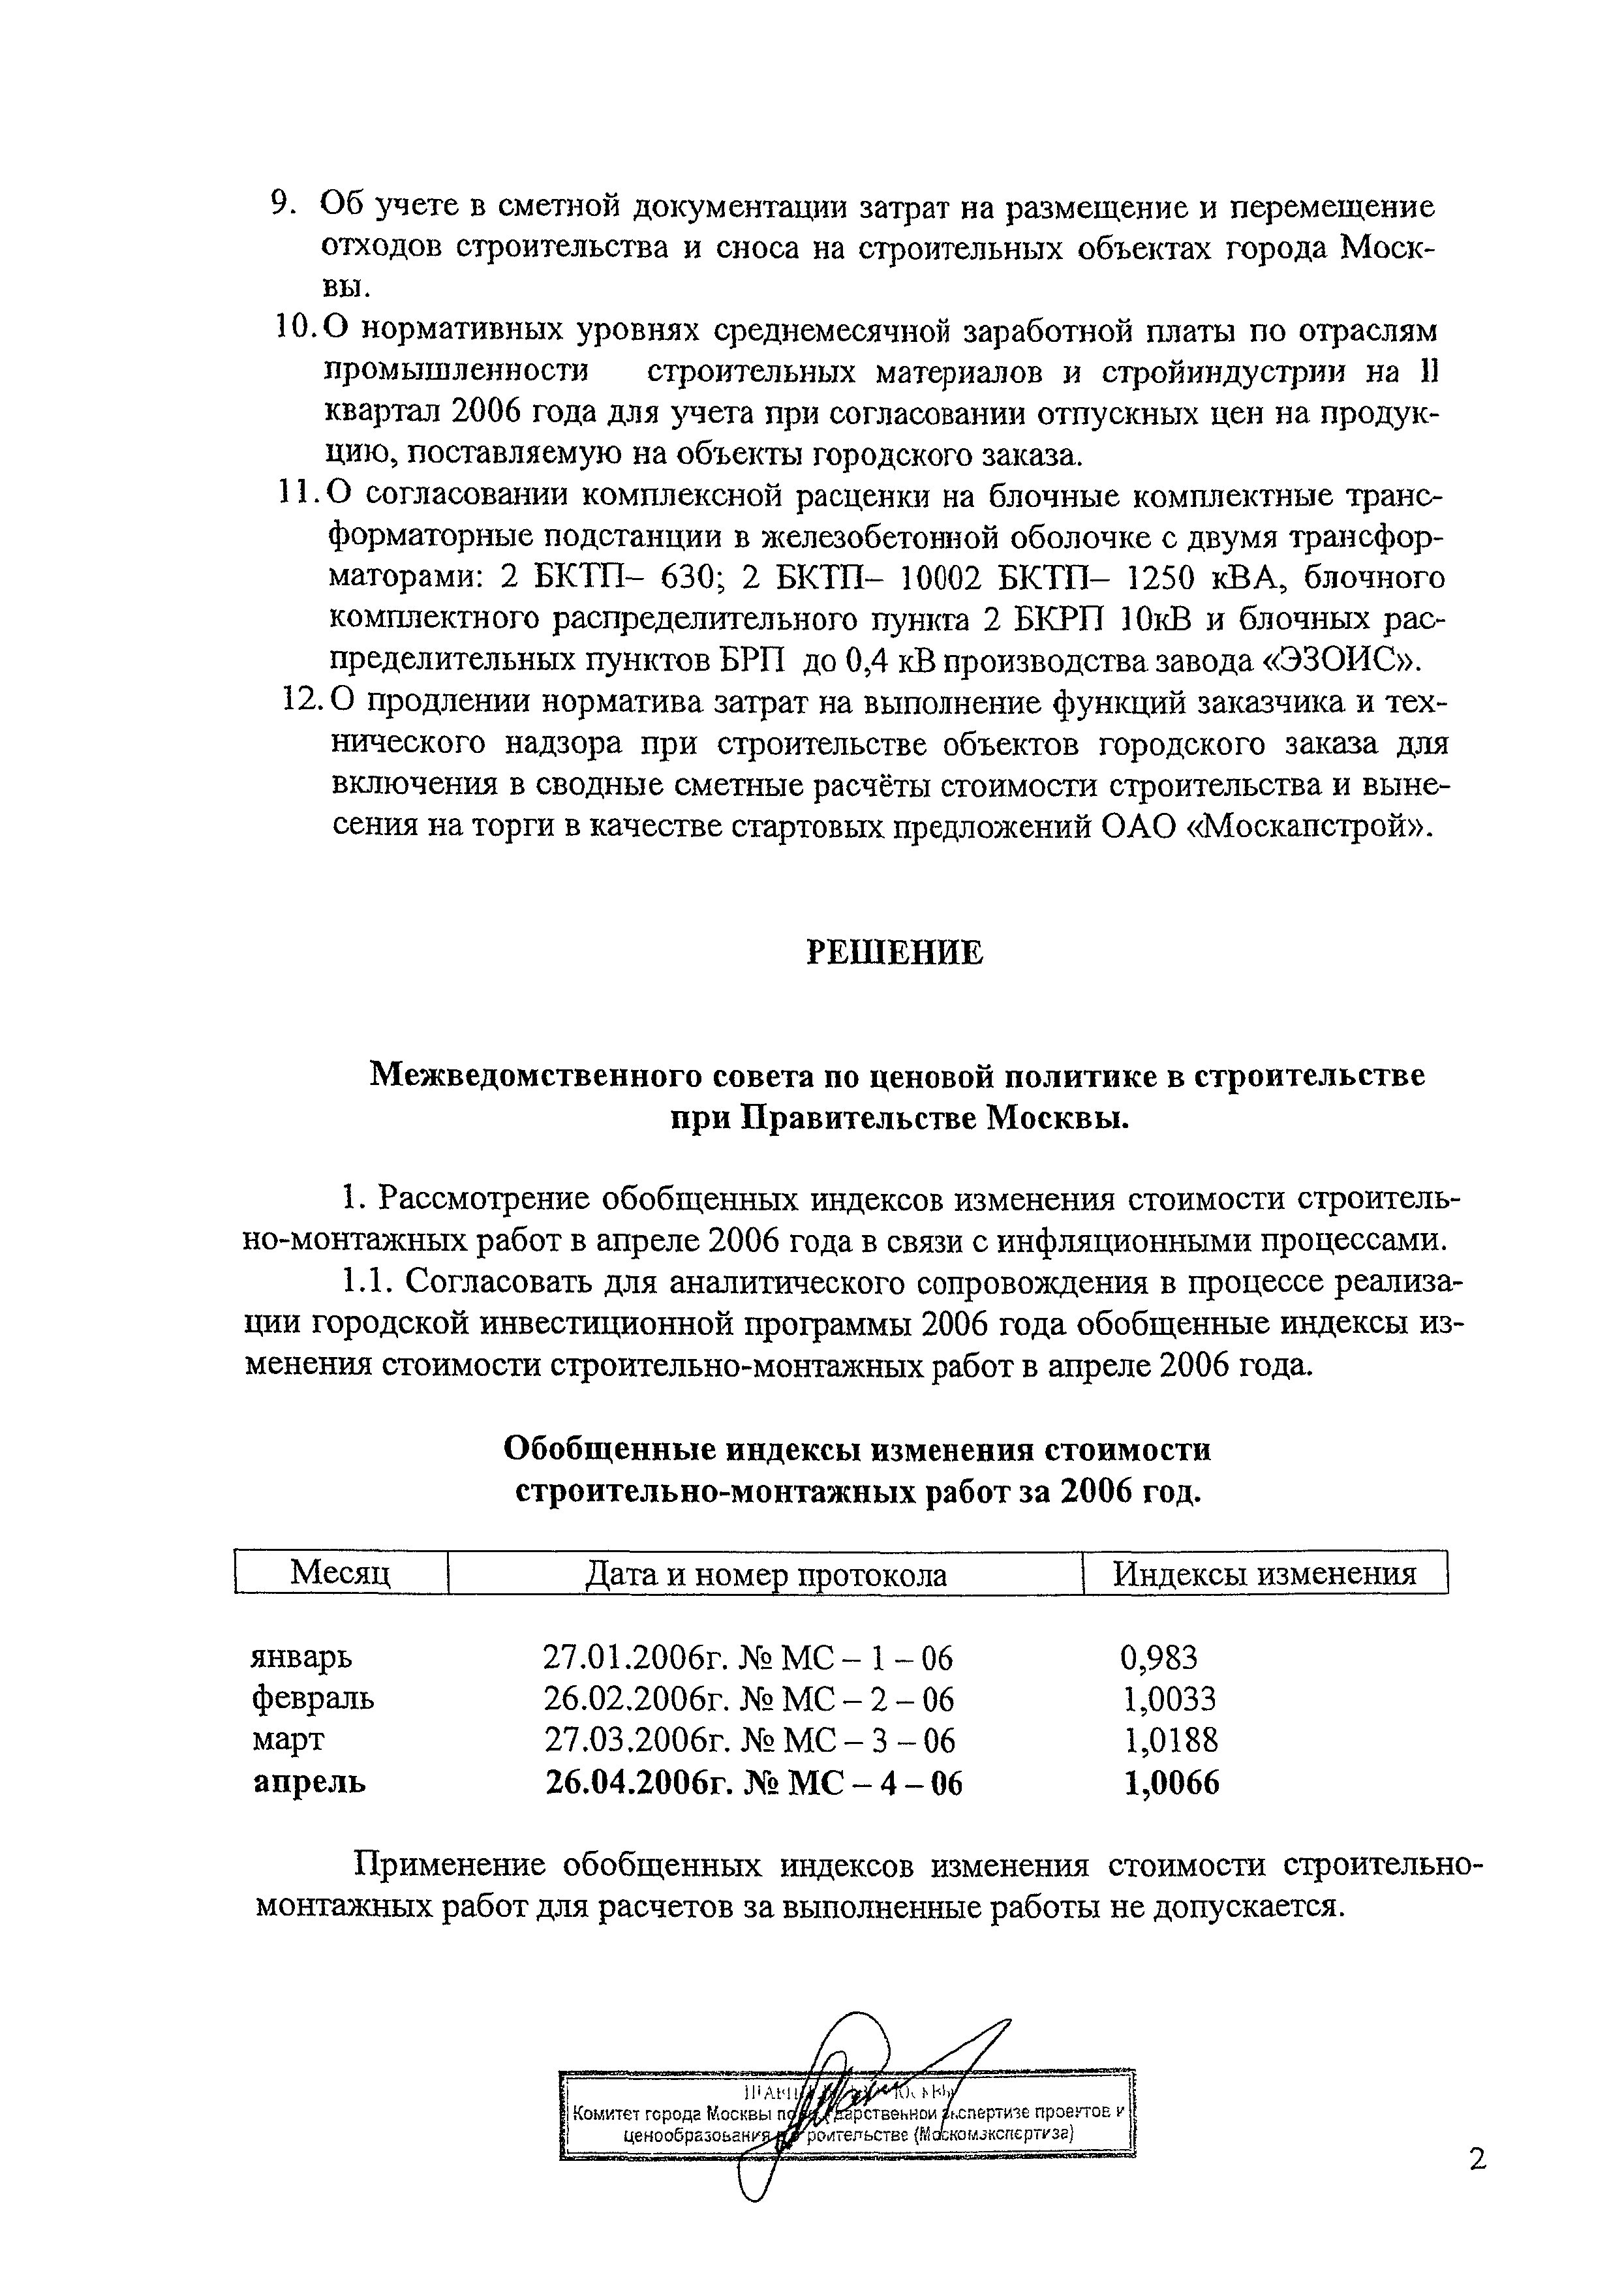 Протокол МС-4-06